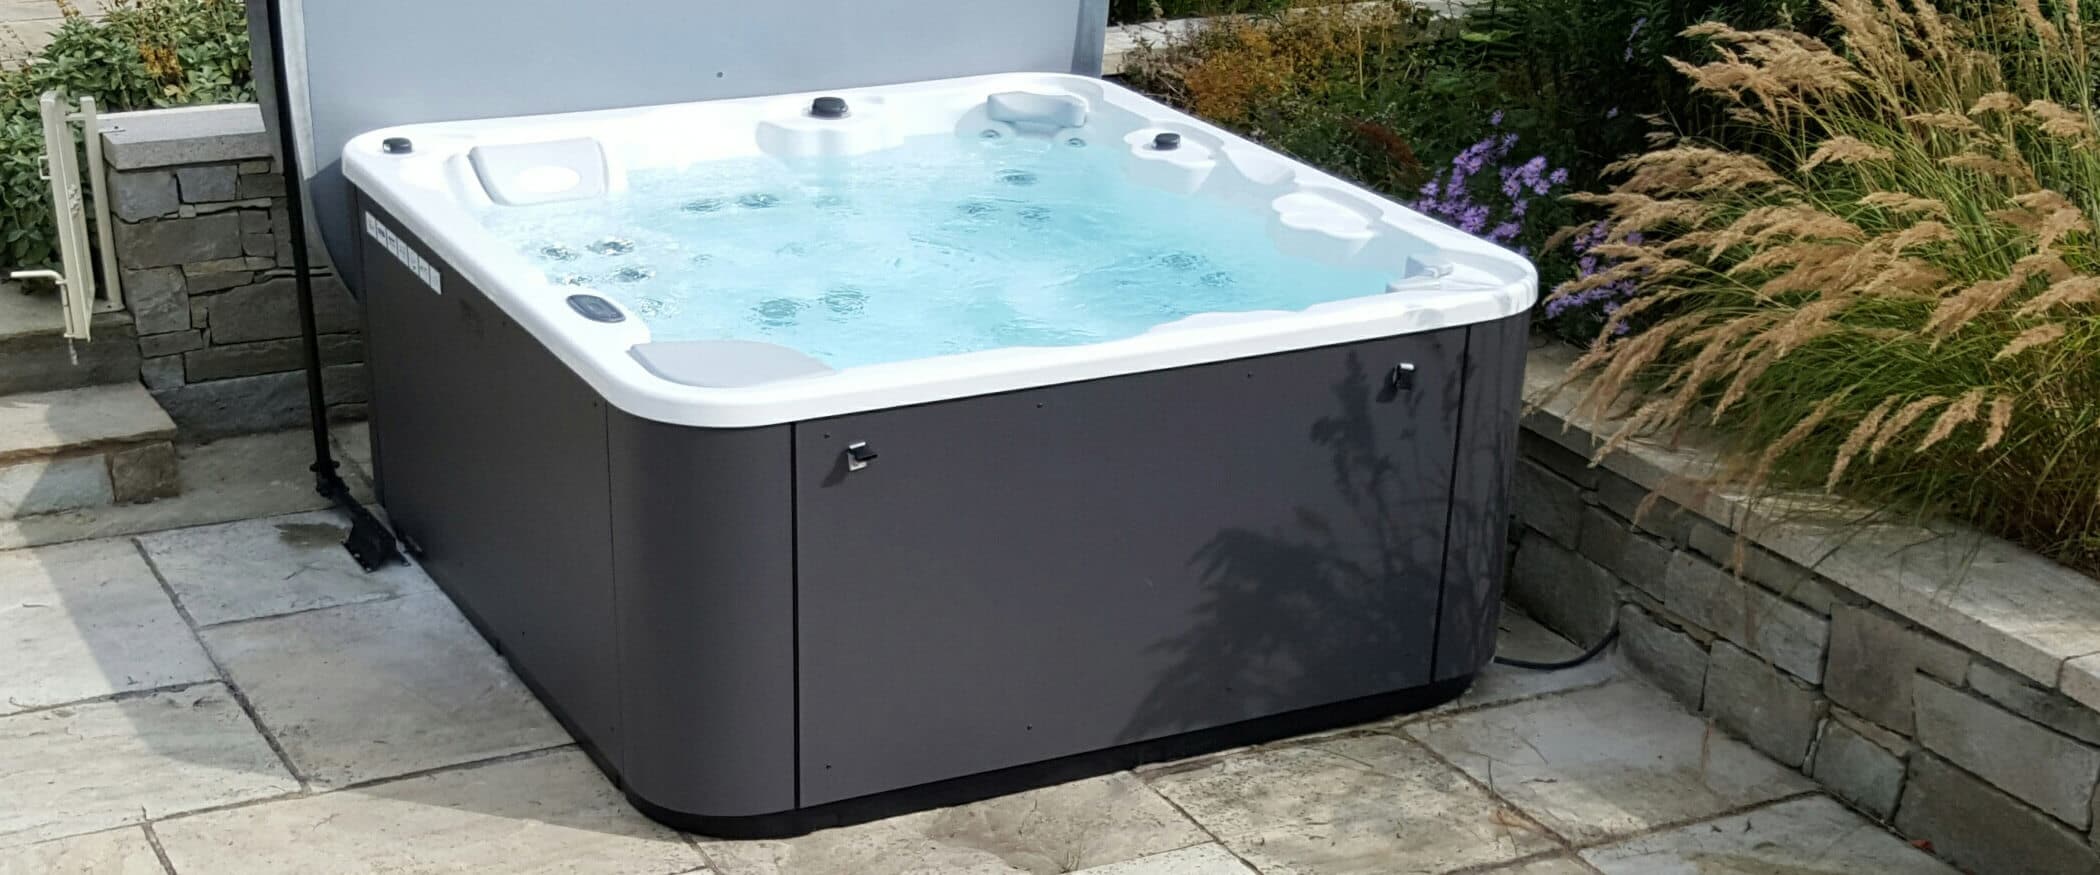 Buy The Aqualife 6 Hot Tub For Residential Use Aquavia Spa